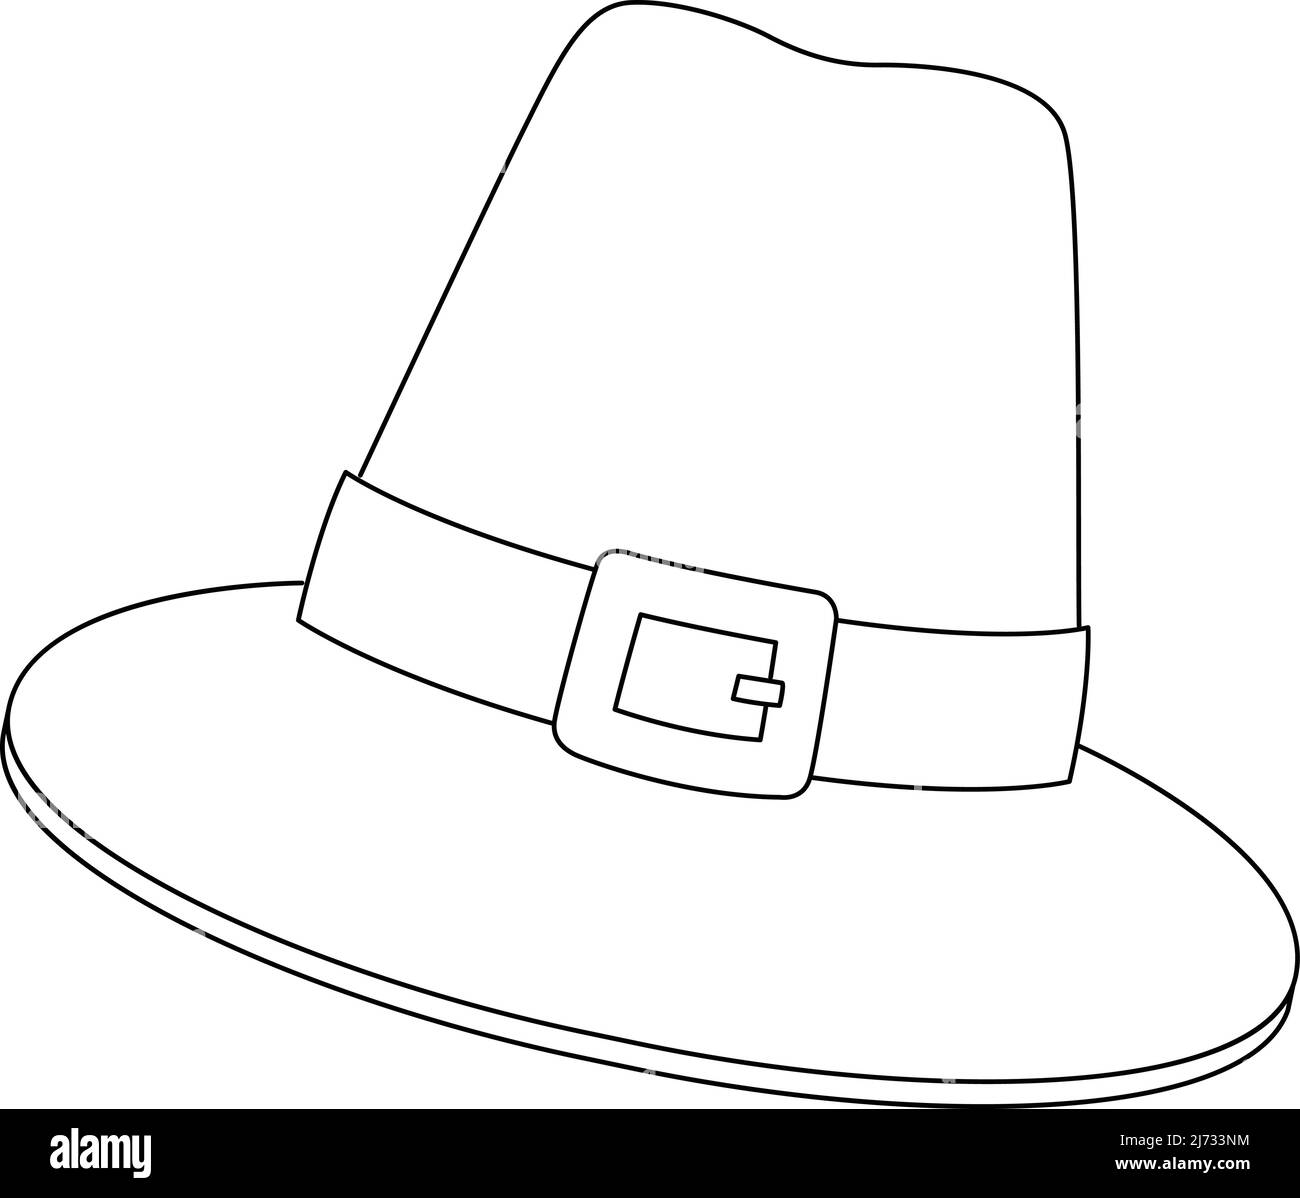 Sombrero de peregrino indio de Acción de Gracias para colorear aislado  Imagen Vector de stock - Alamy